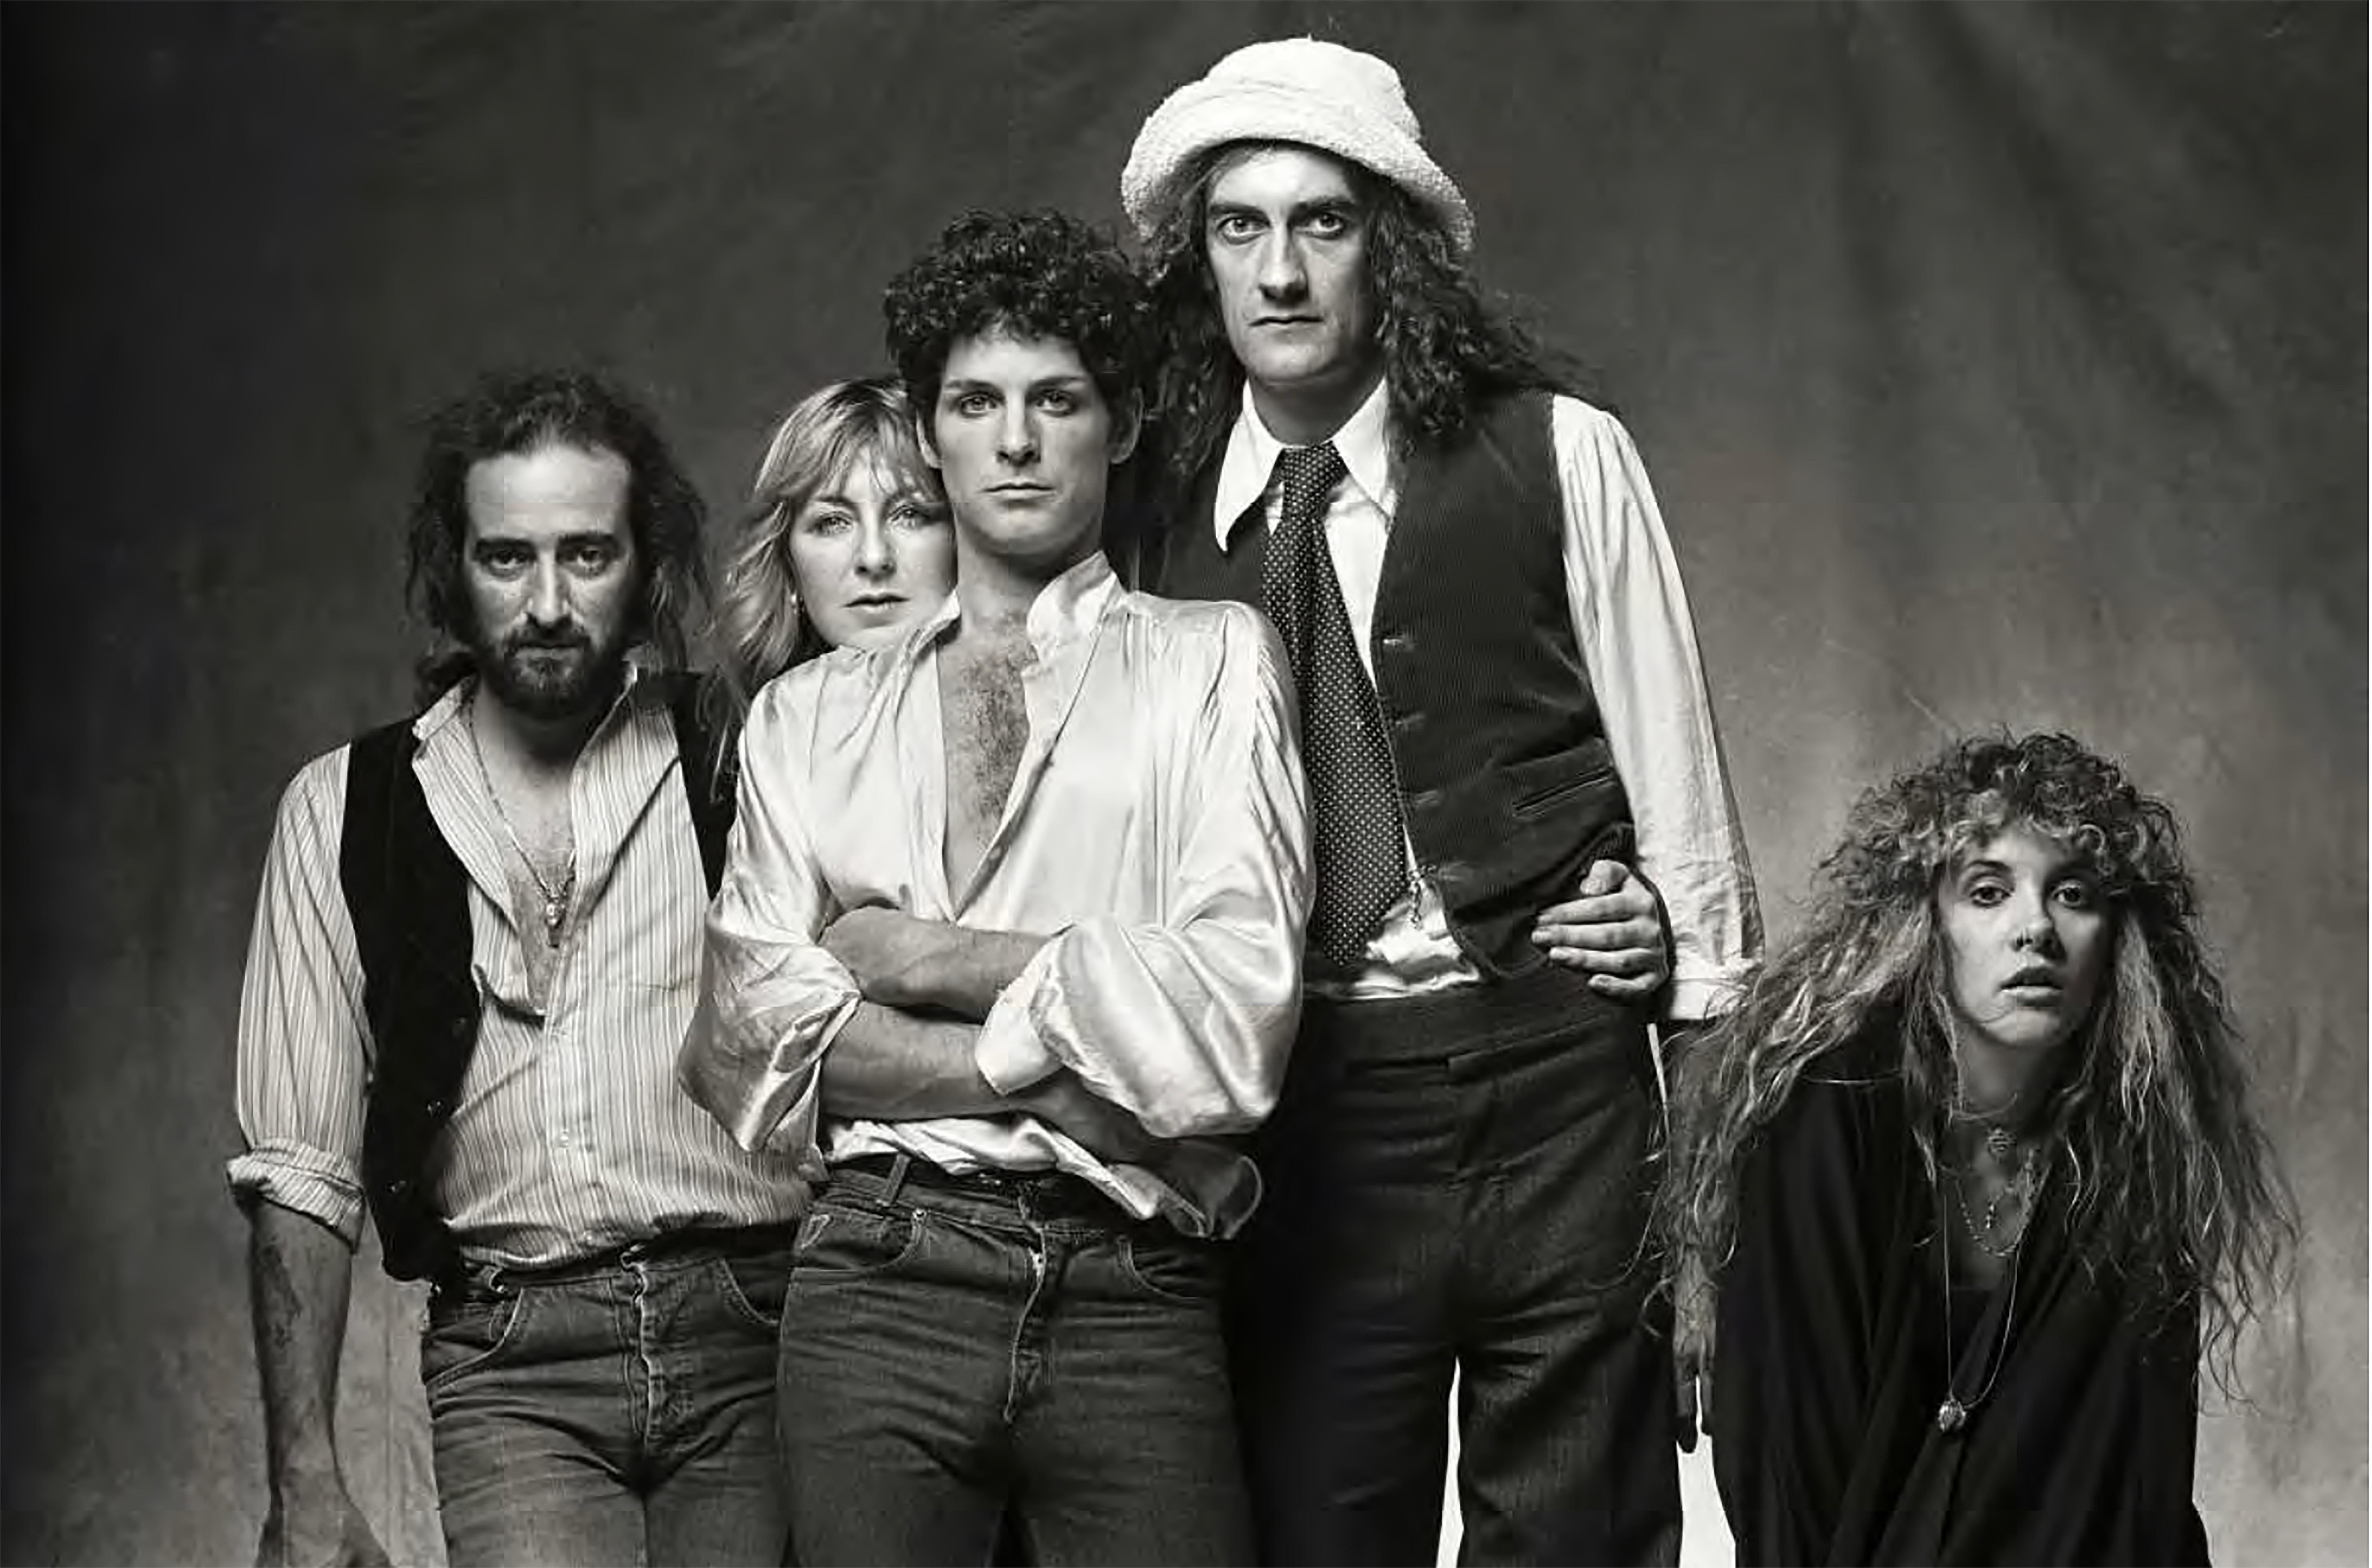 Norman Seeff Black and White Photograph - Fleetwood Mac, Los Angeles 1978 “Tusk I”